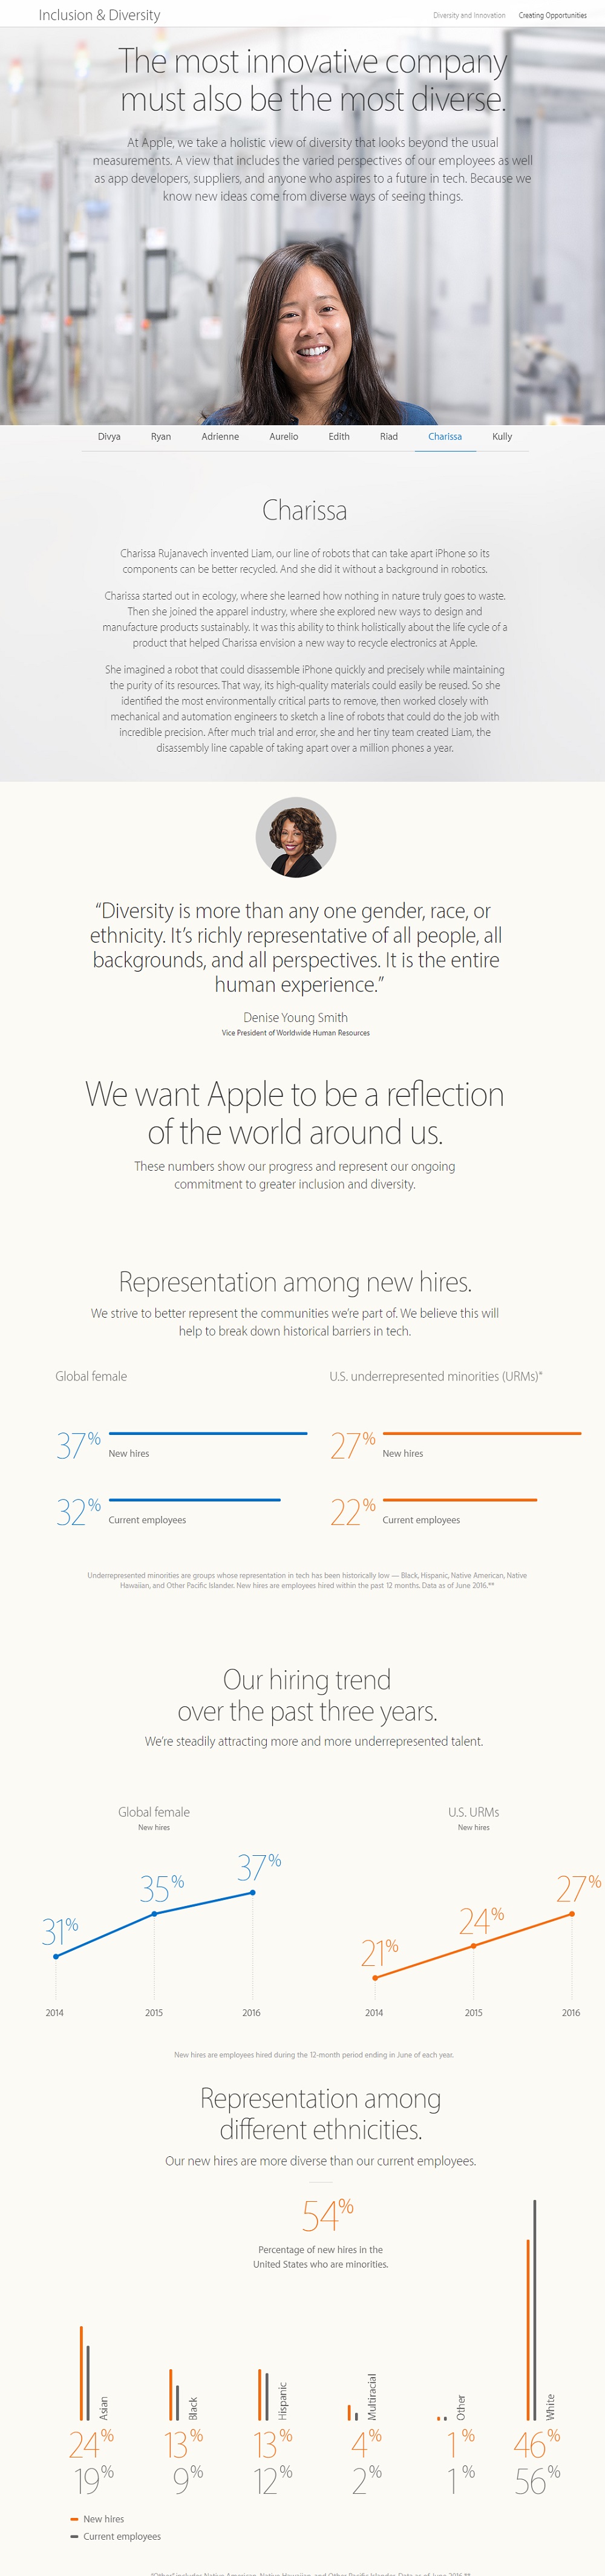 Apple Company Diversity Page